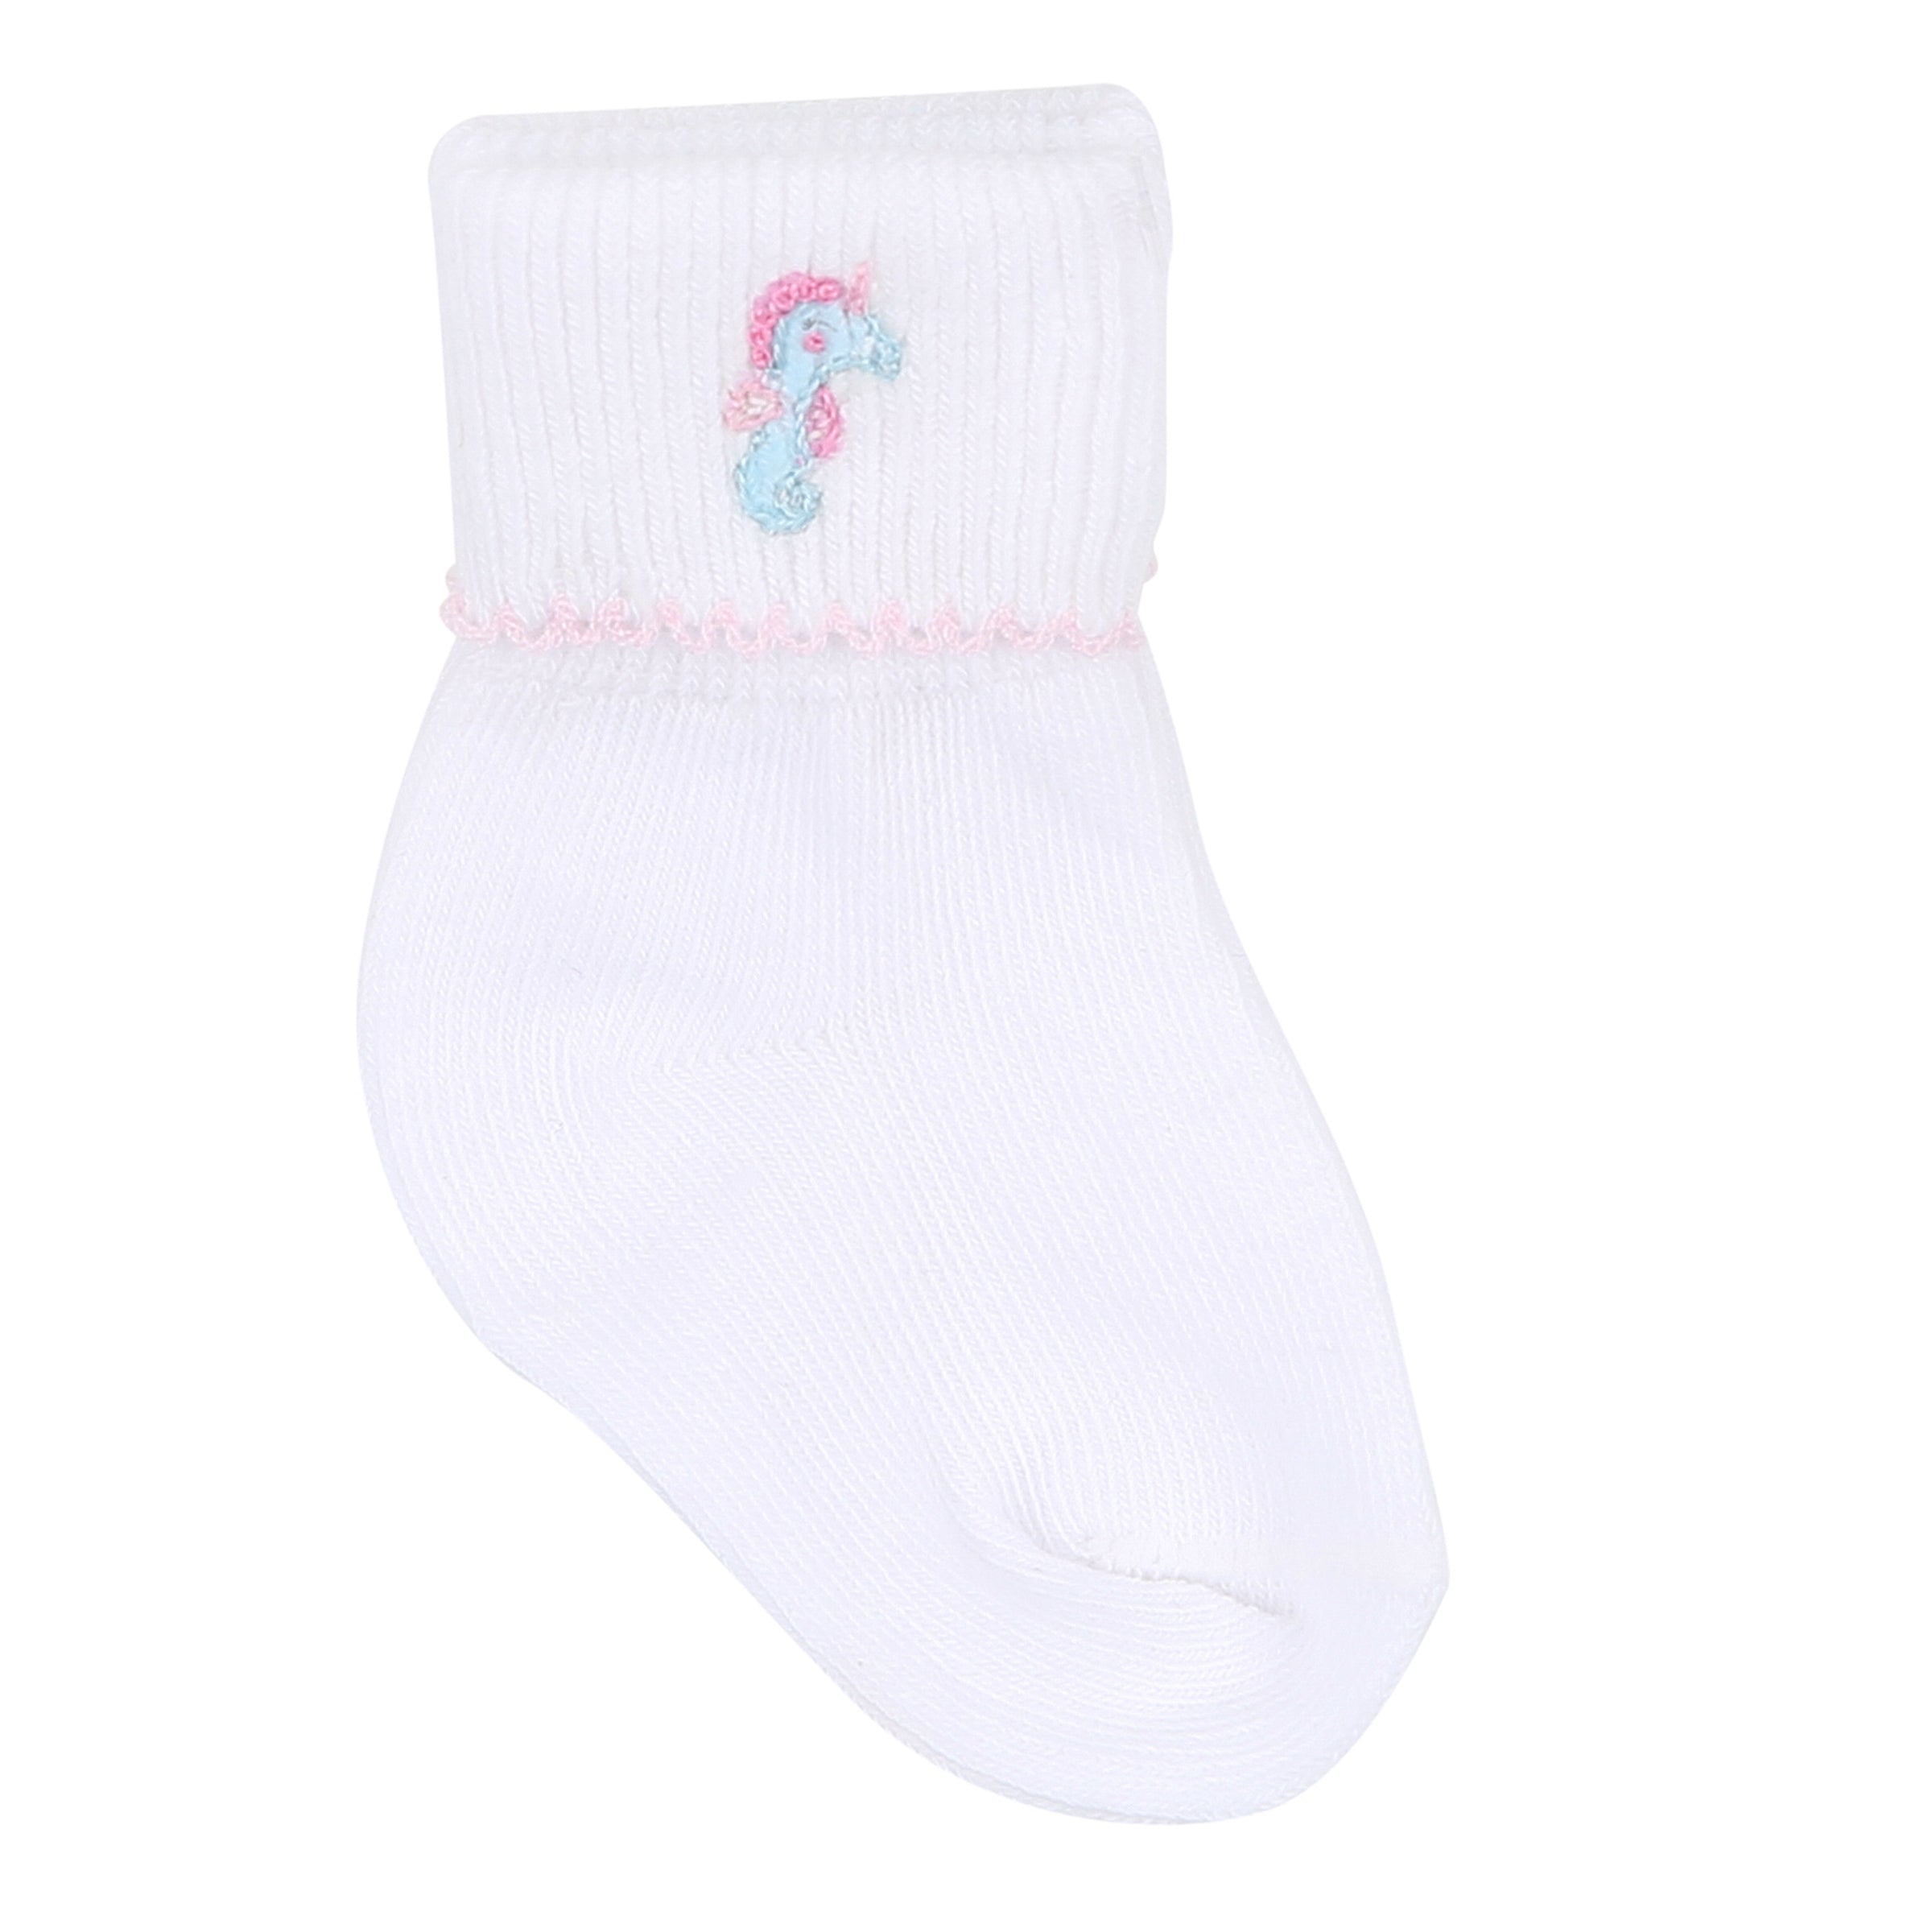 Ocean Bliss Embroidered Socks - Pink